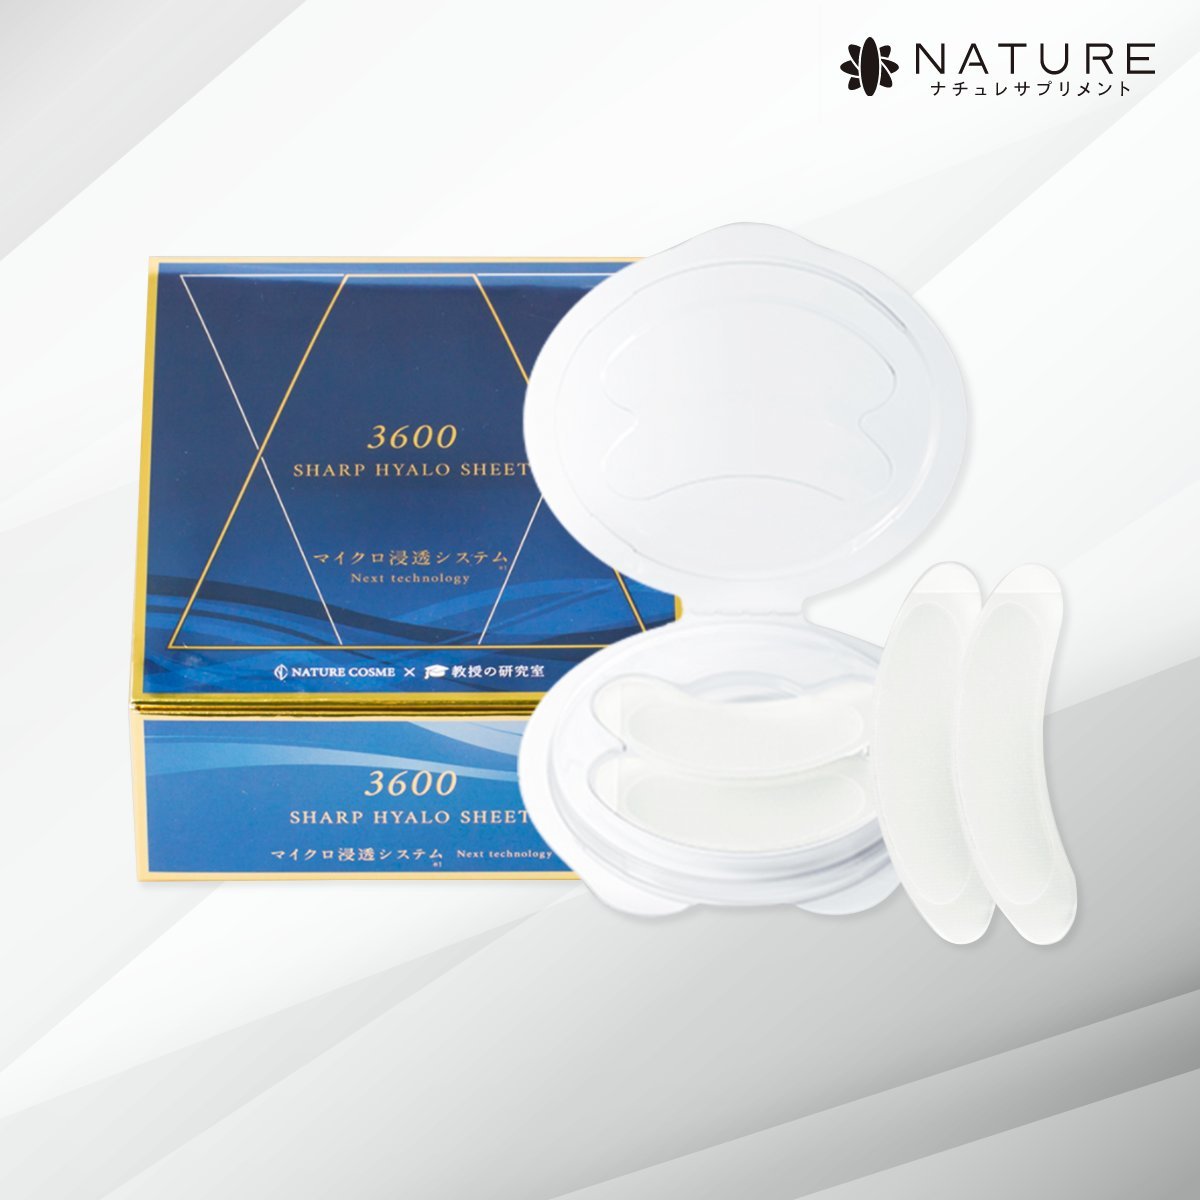 Japan 3600 Sharp Hyalo Sheet Eye Mask - 1 Box (2 SHEETS x 8 PAIRS)